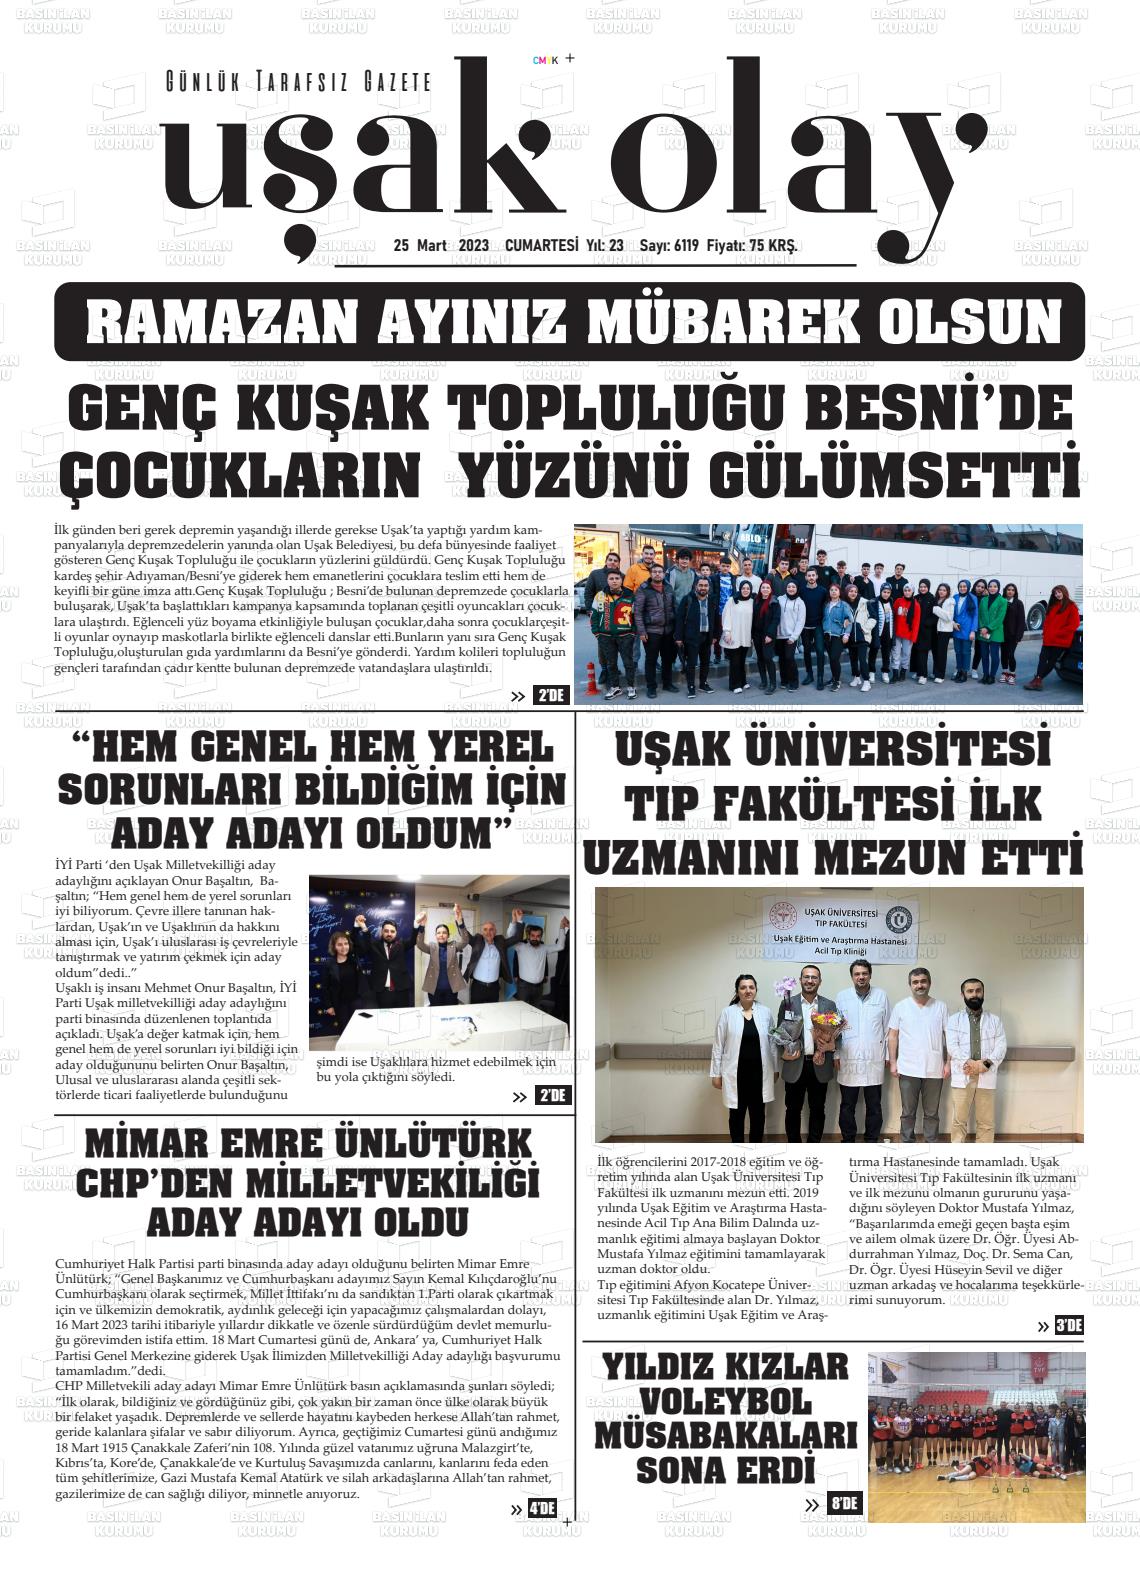 25 Mart 2023 Uşak Olay Gazete Manşeti